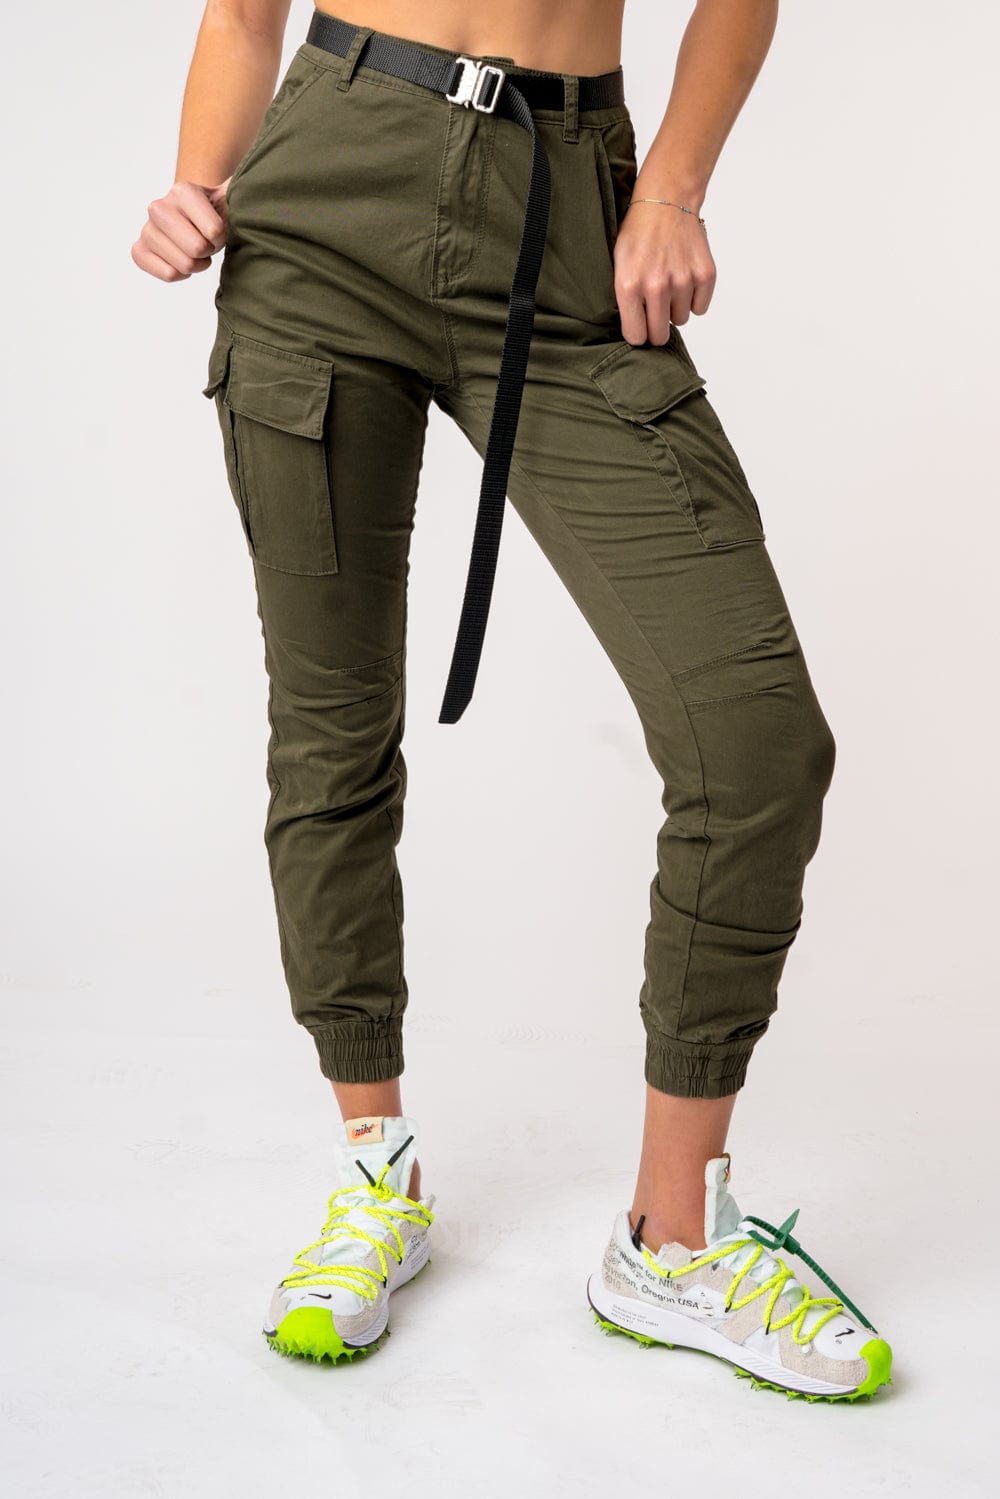 Pocket jogger pants - Women